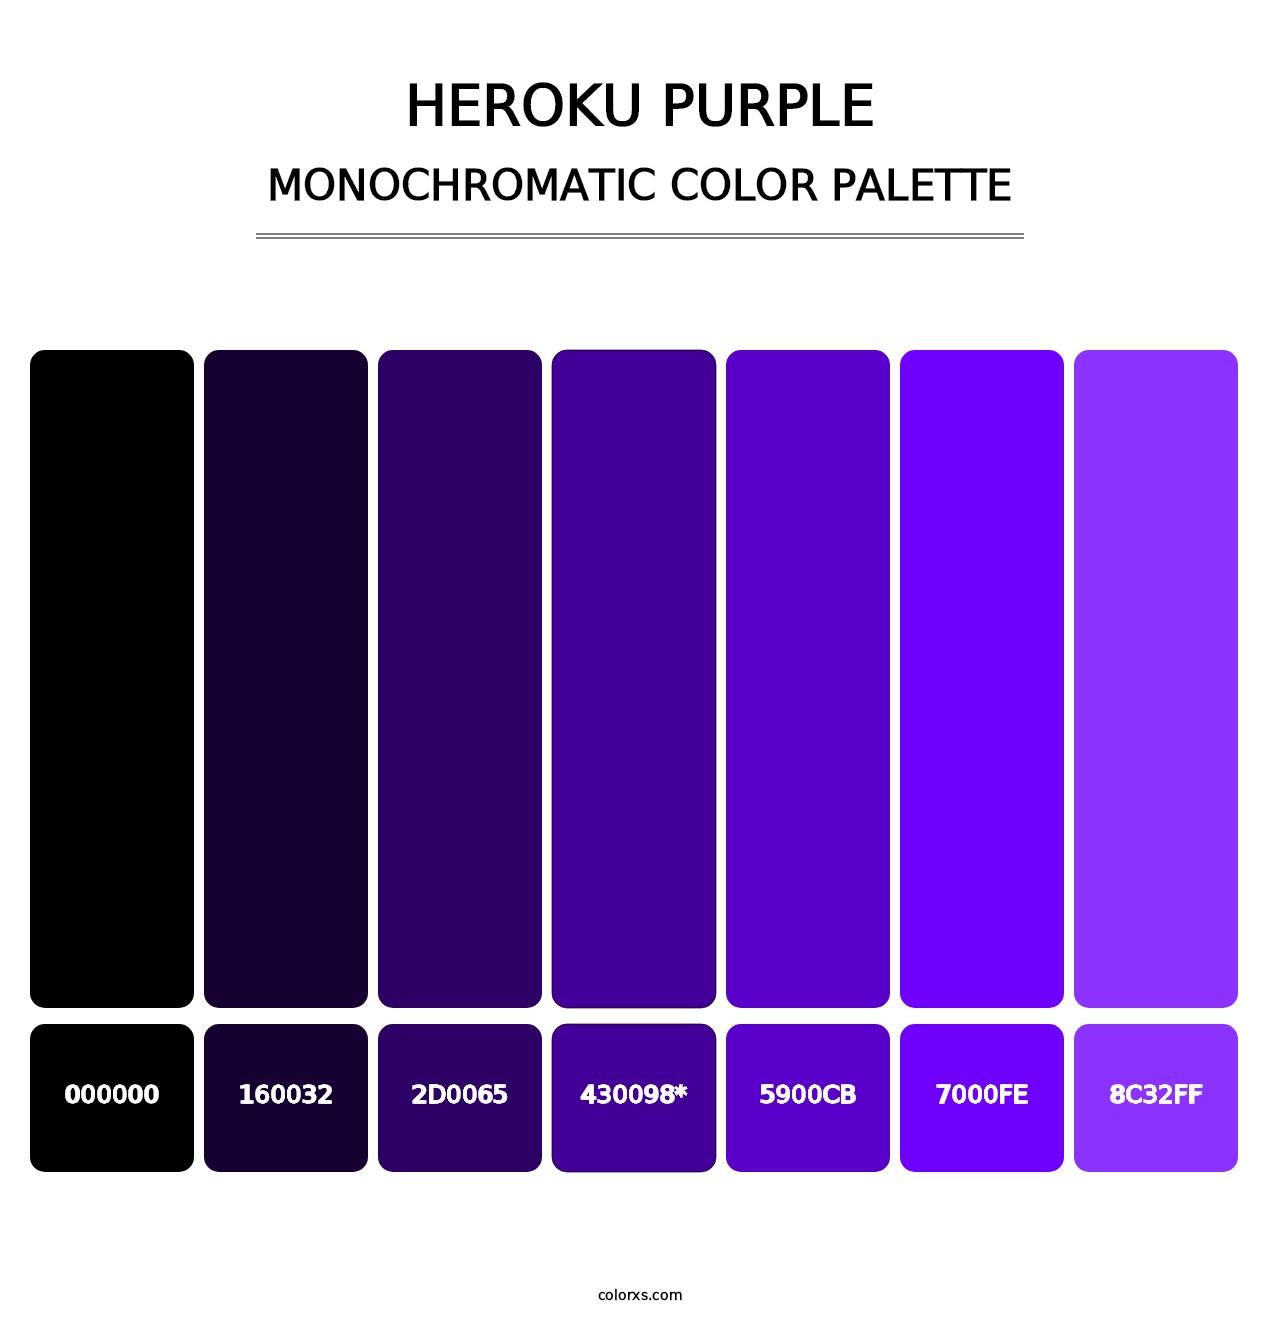 Heroku Purple - Monochromatic Color Palette